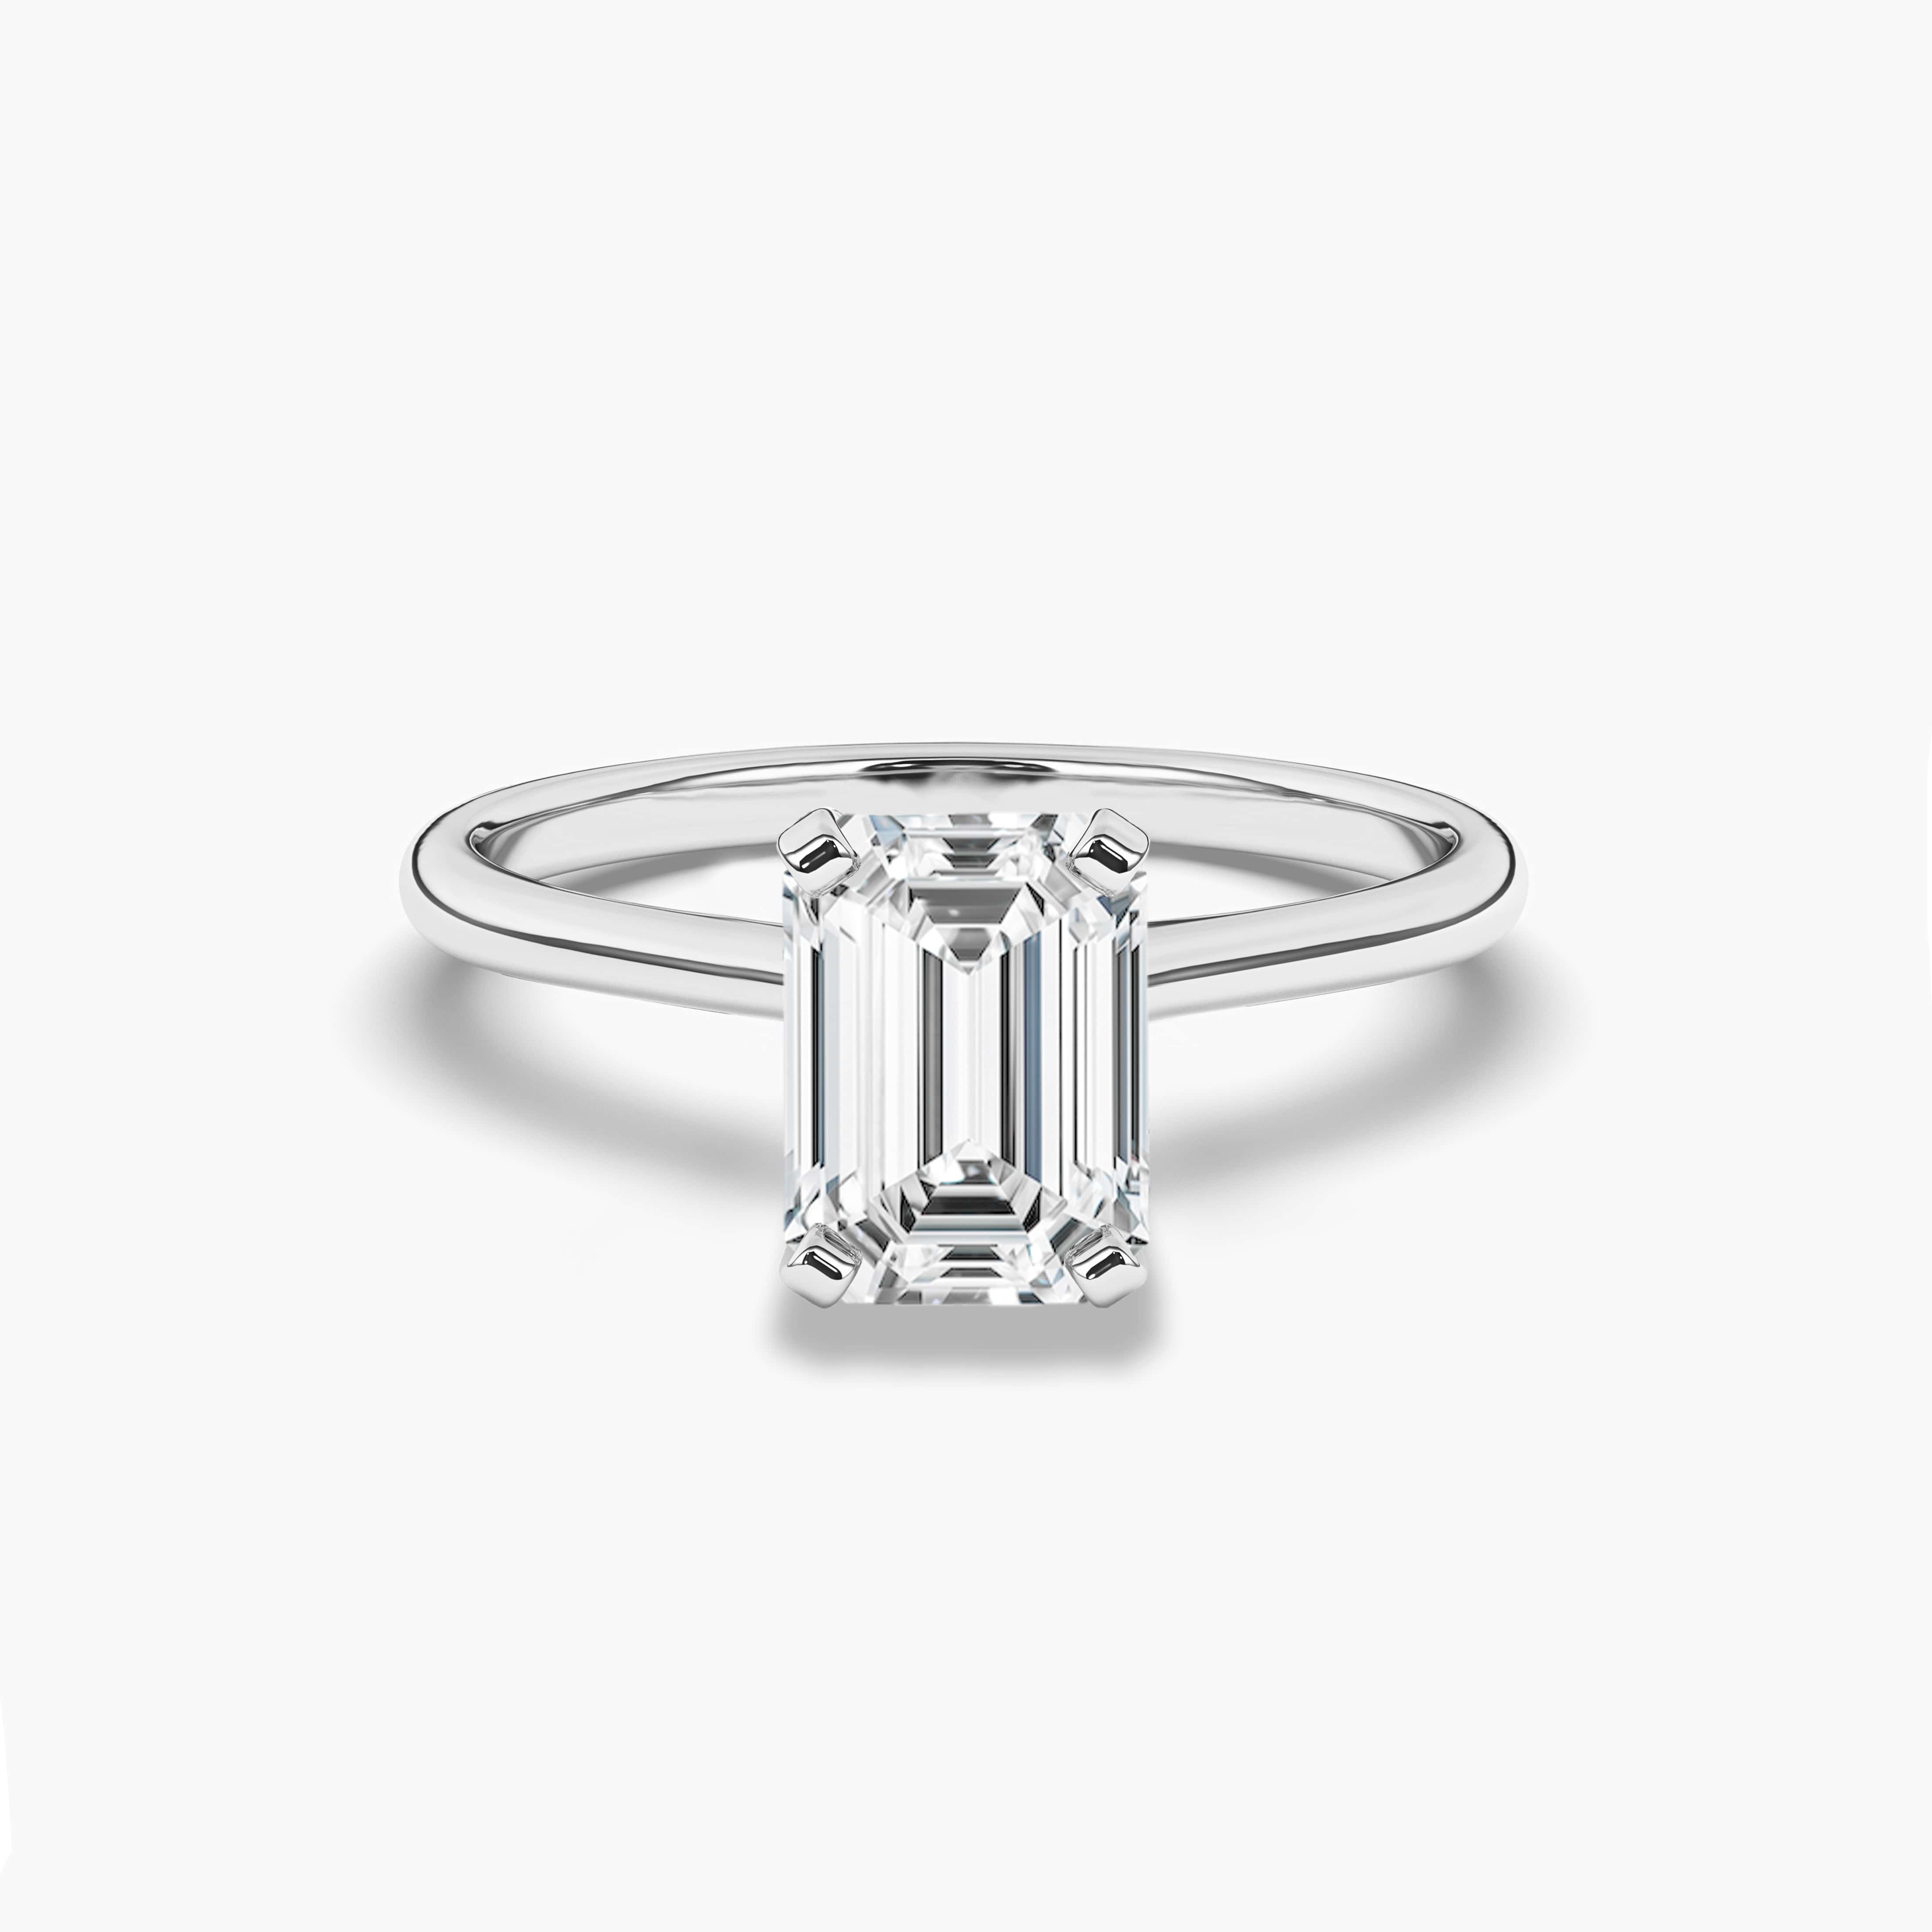 solitaire diamond ring